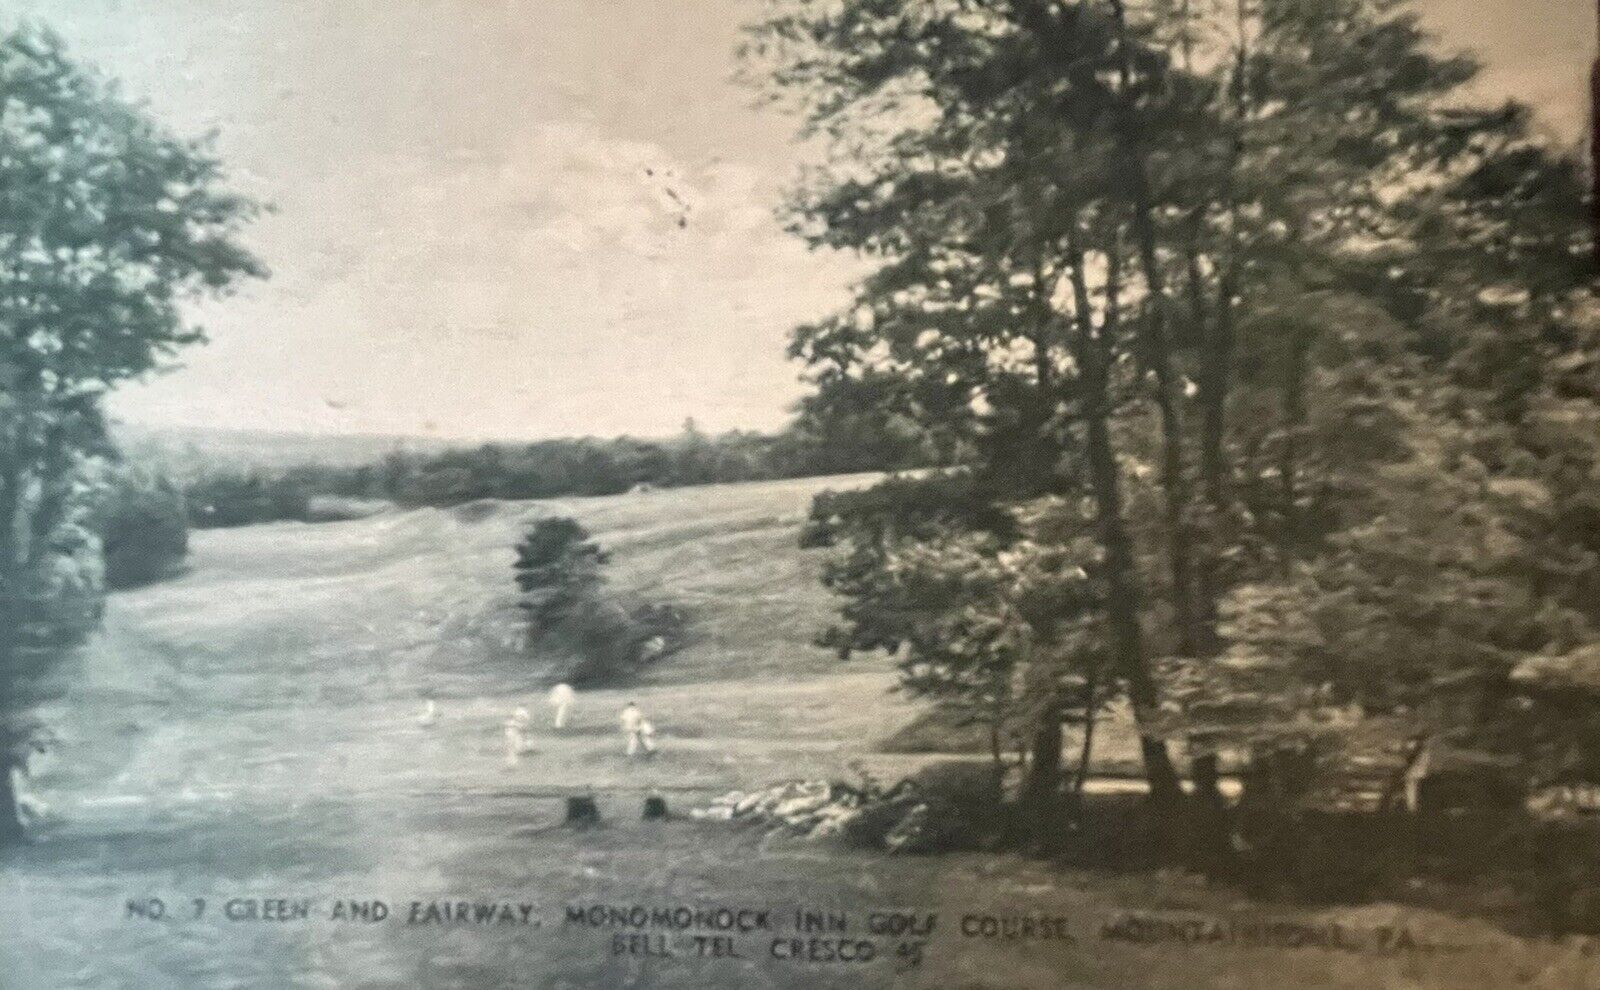 Postcard Vintage RCCP  1938 No.7 Green and Fairway,Monomonok Inn Golf Course PA